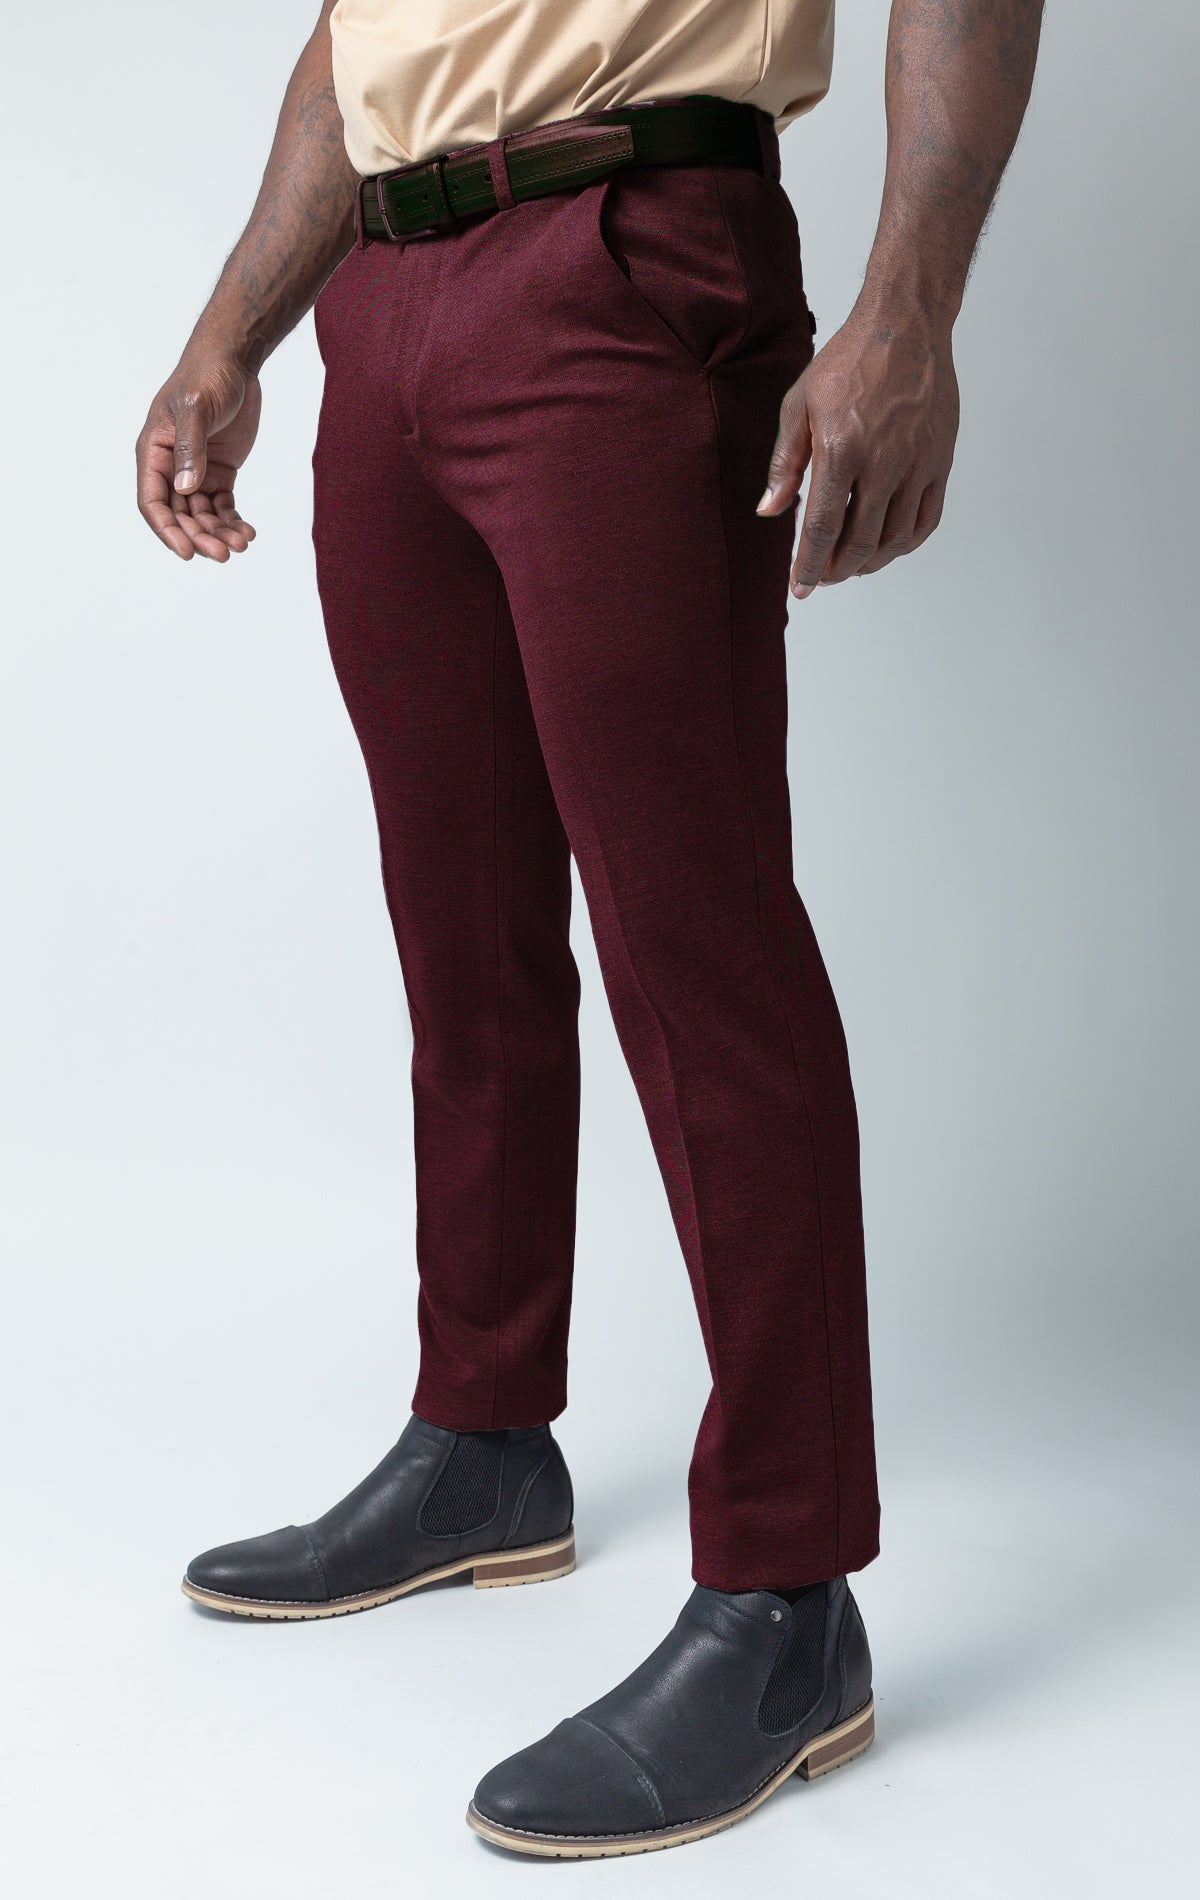 Burgundy dress pants with elastic waistband technology.